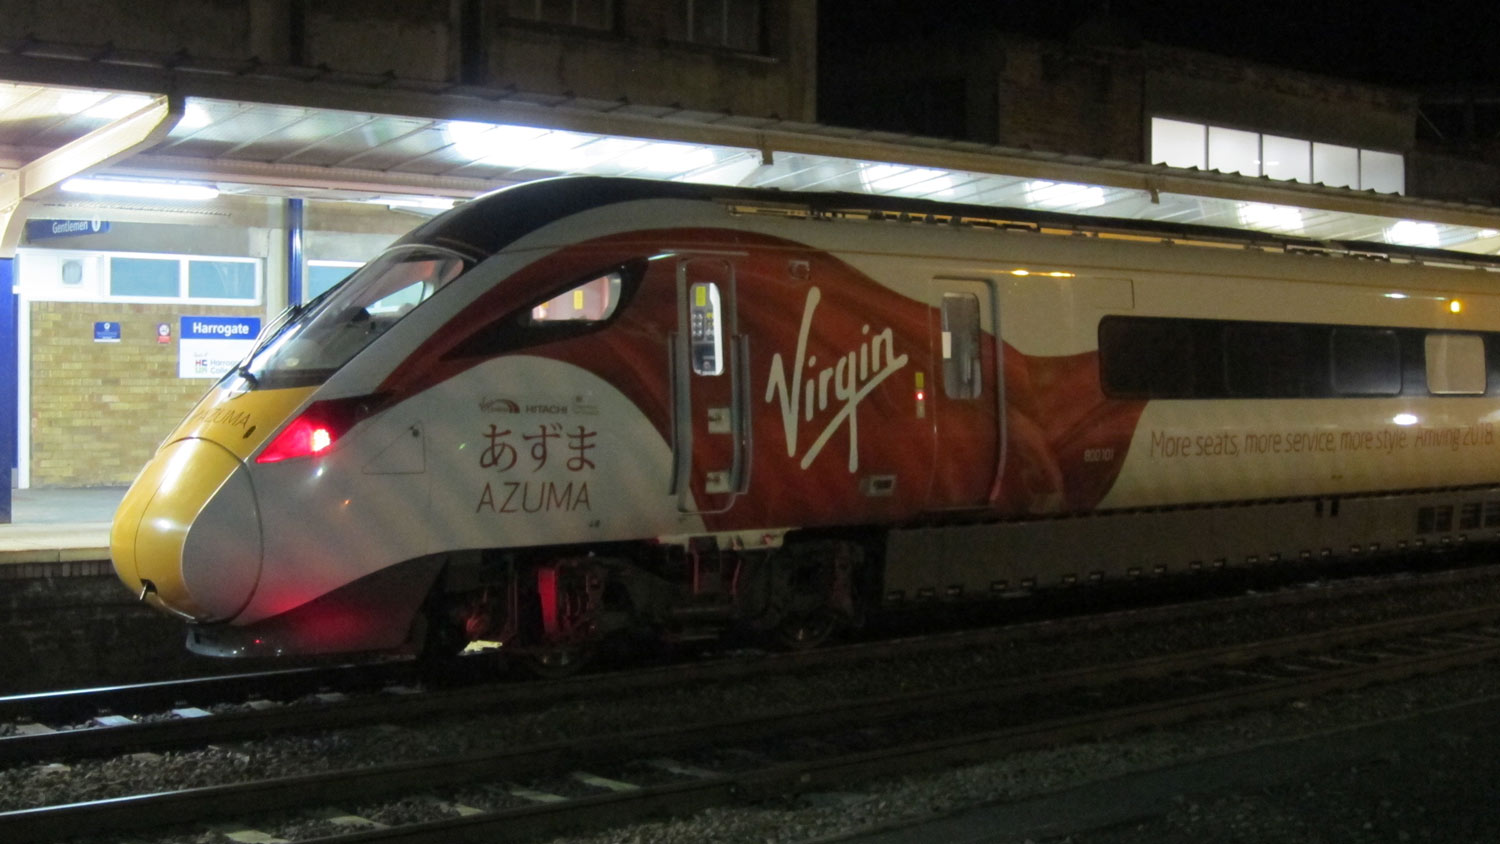 first Virgin Azuma train came into Harrogate Station